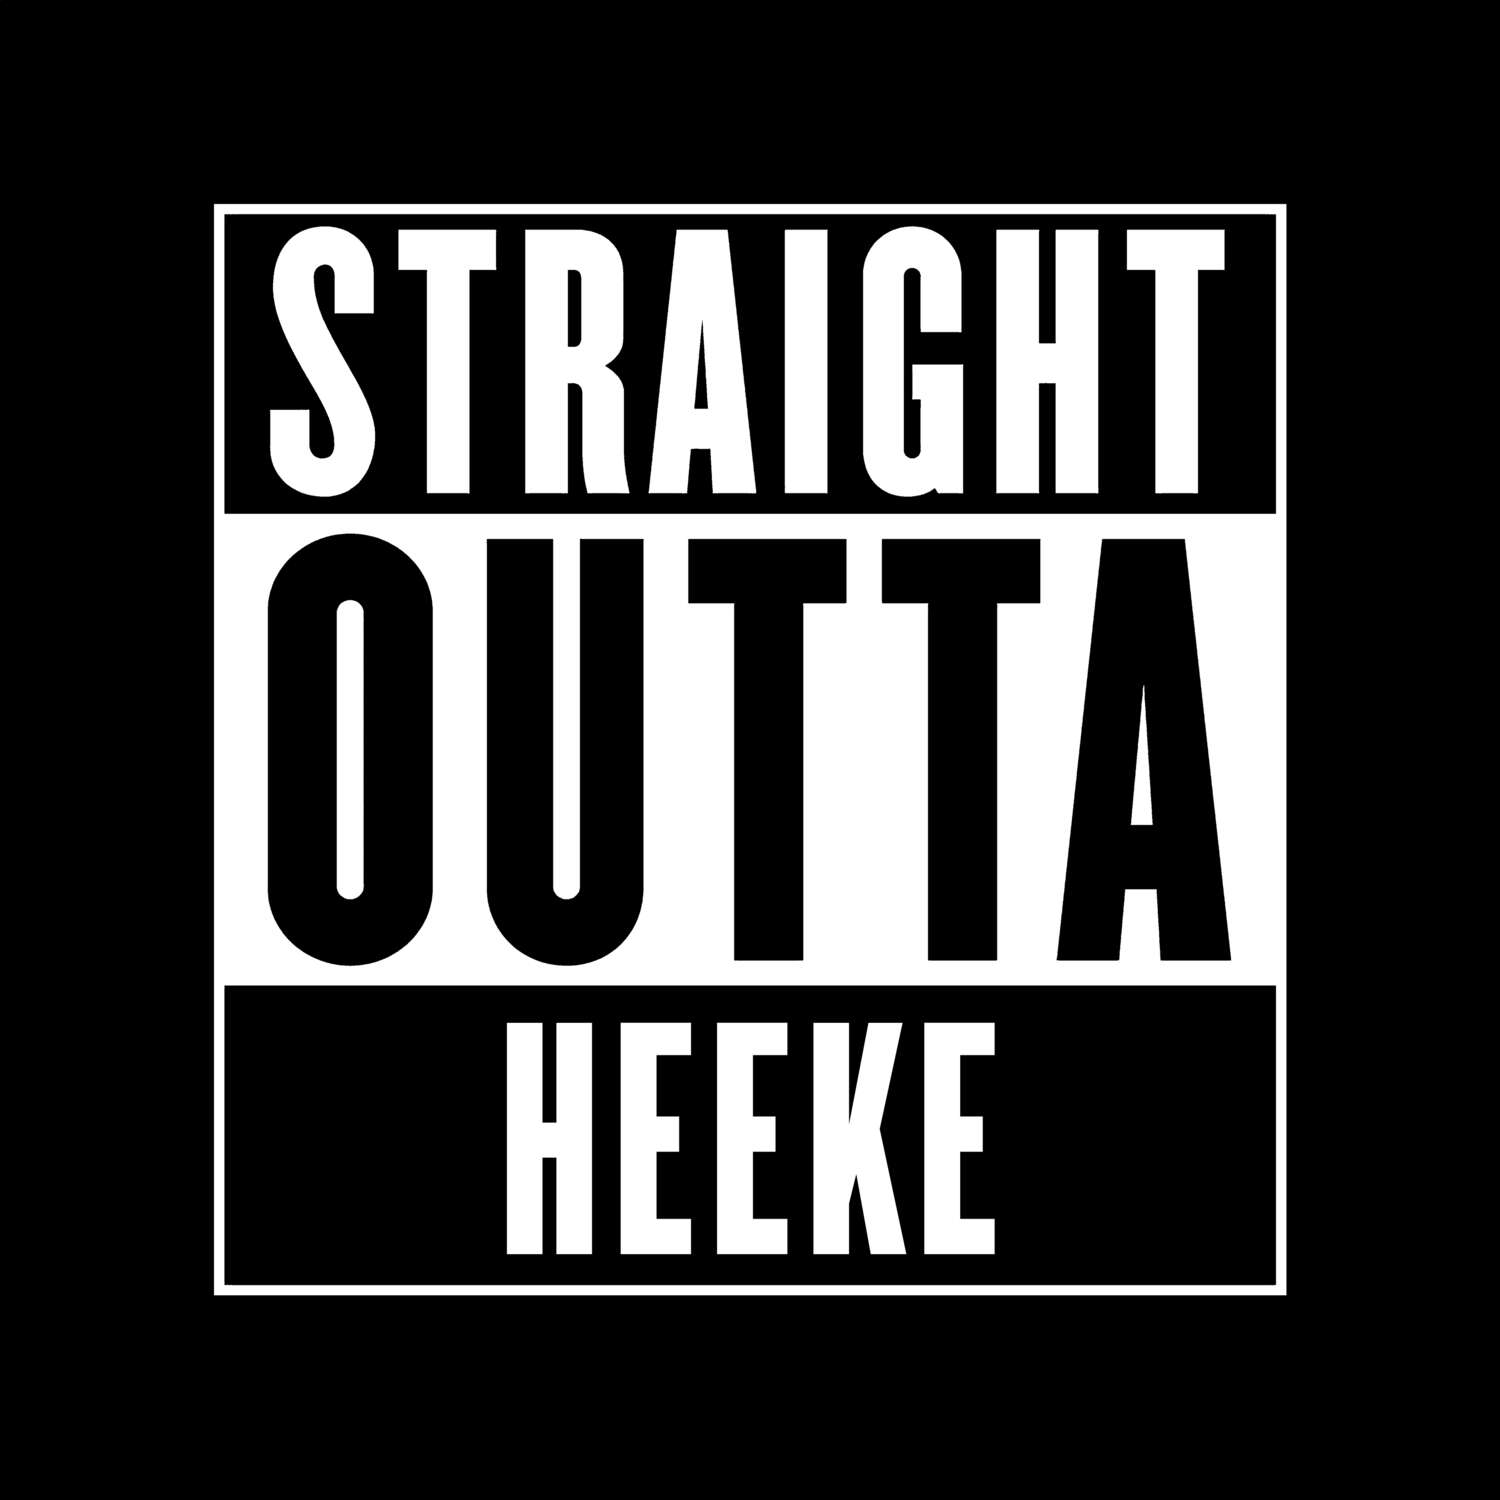 Heeke T-Shirt »Straight Outta«